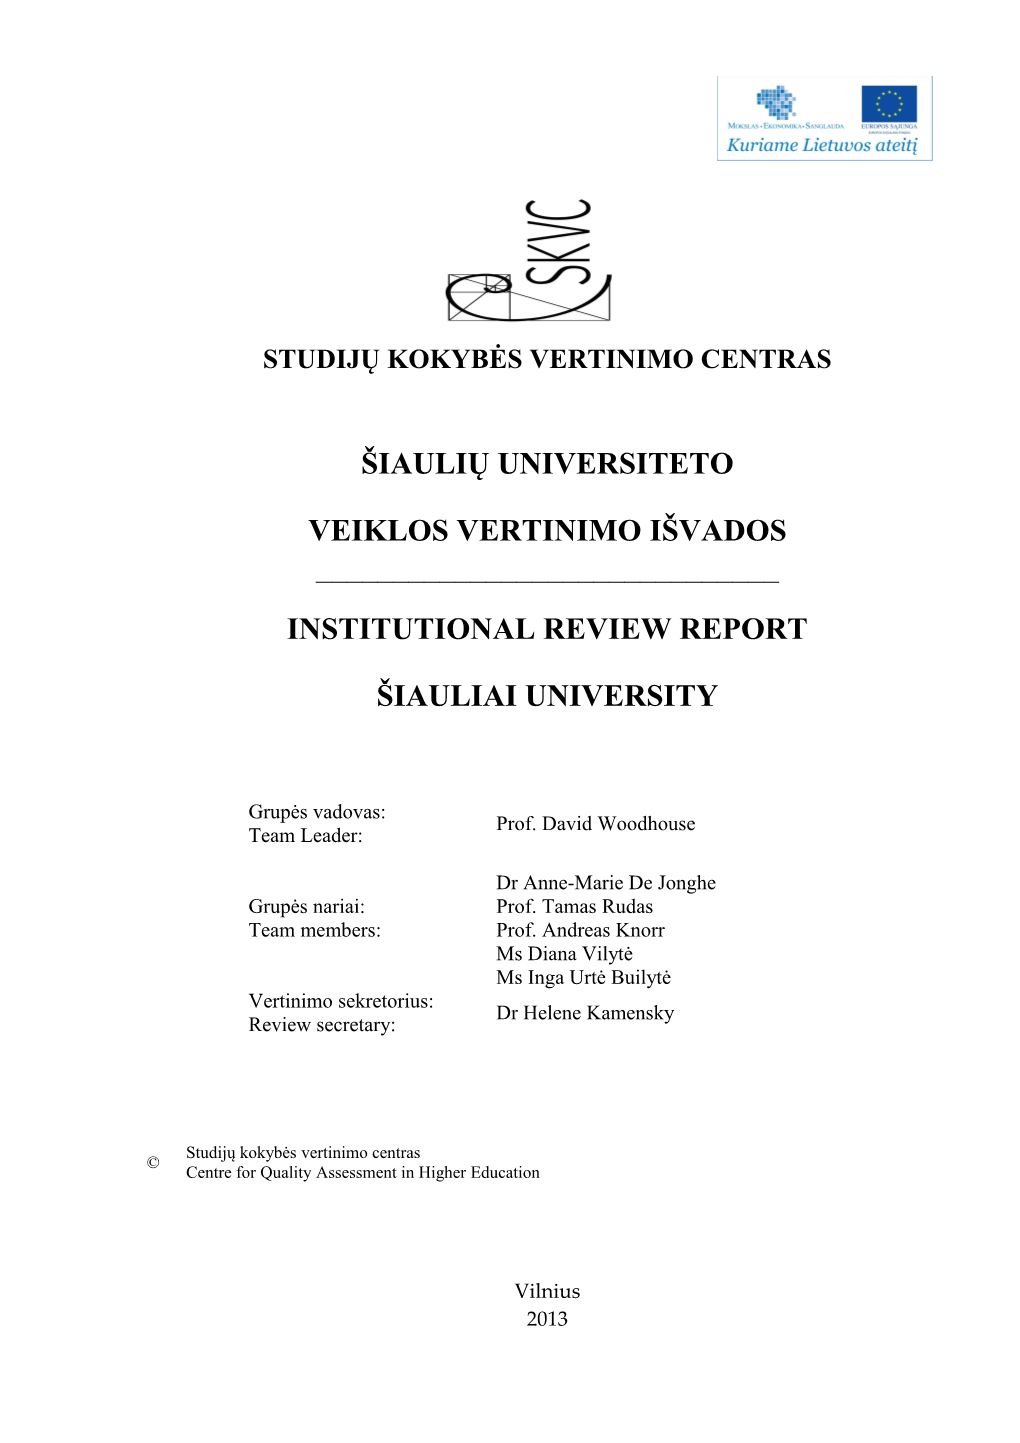 Siauliai University Review Report November 2012